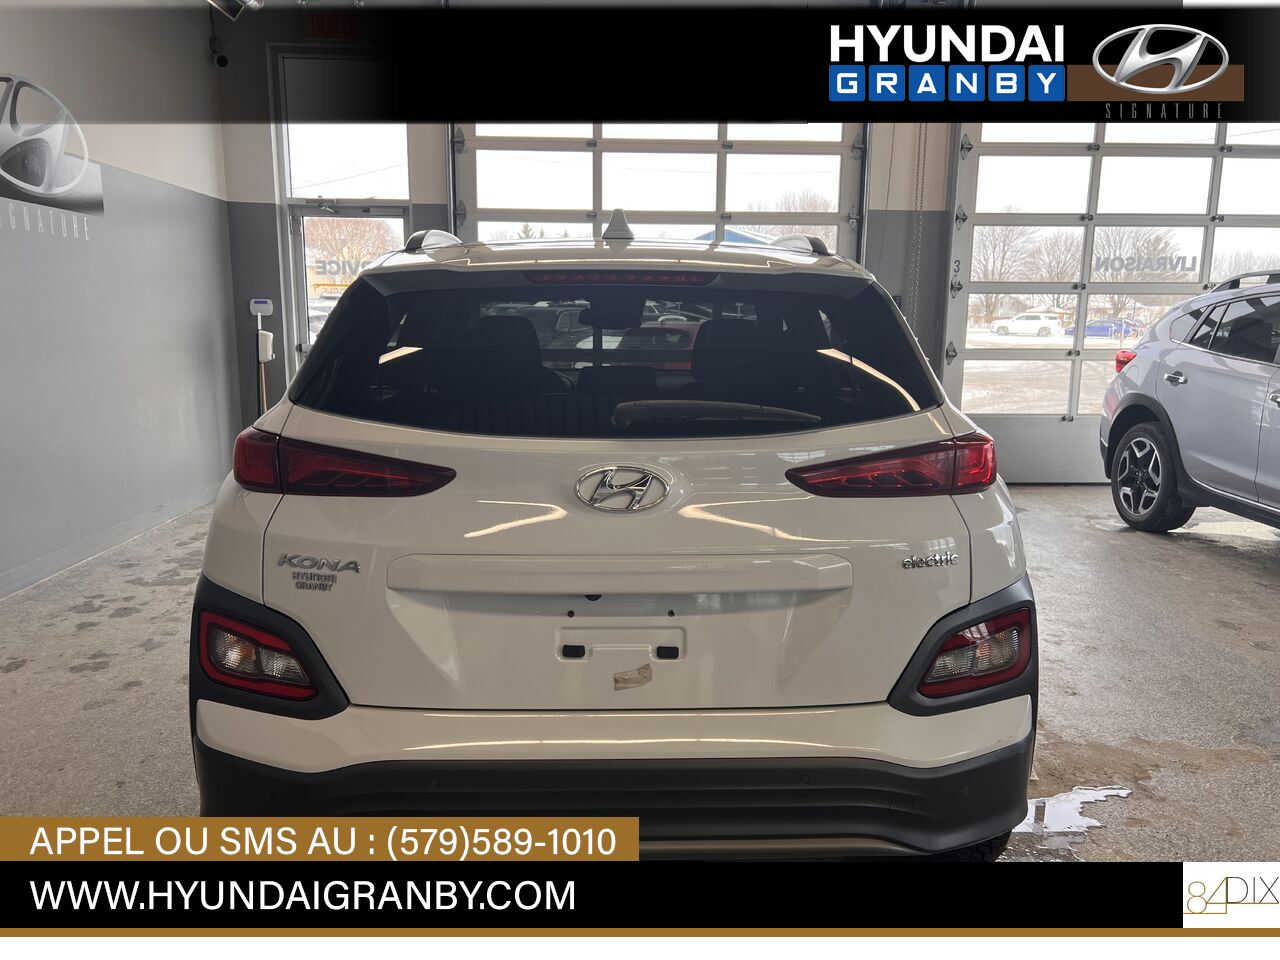 2019 Hyundai Kona électrique Granby - photo #4